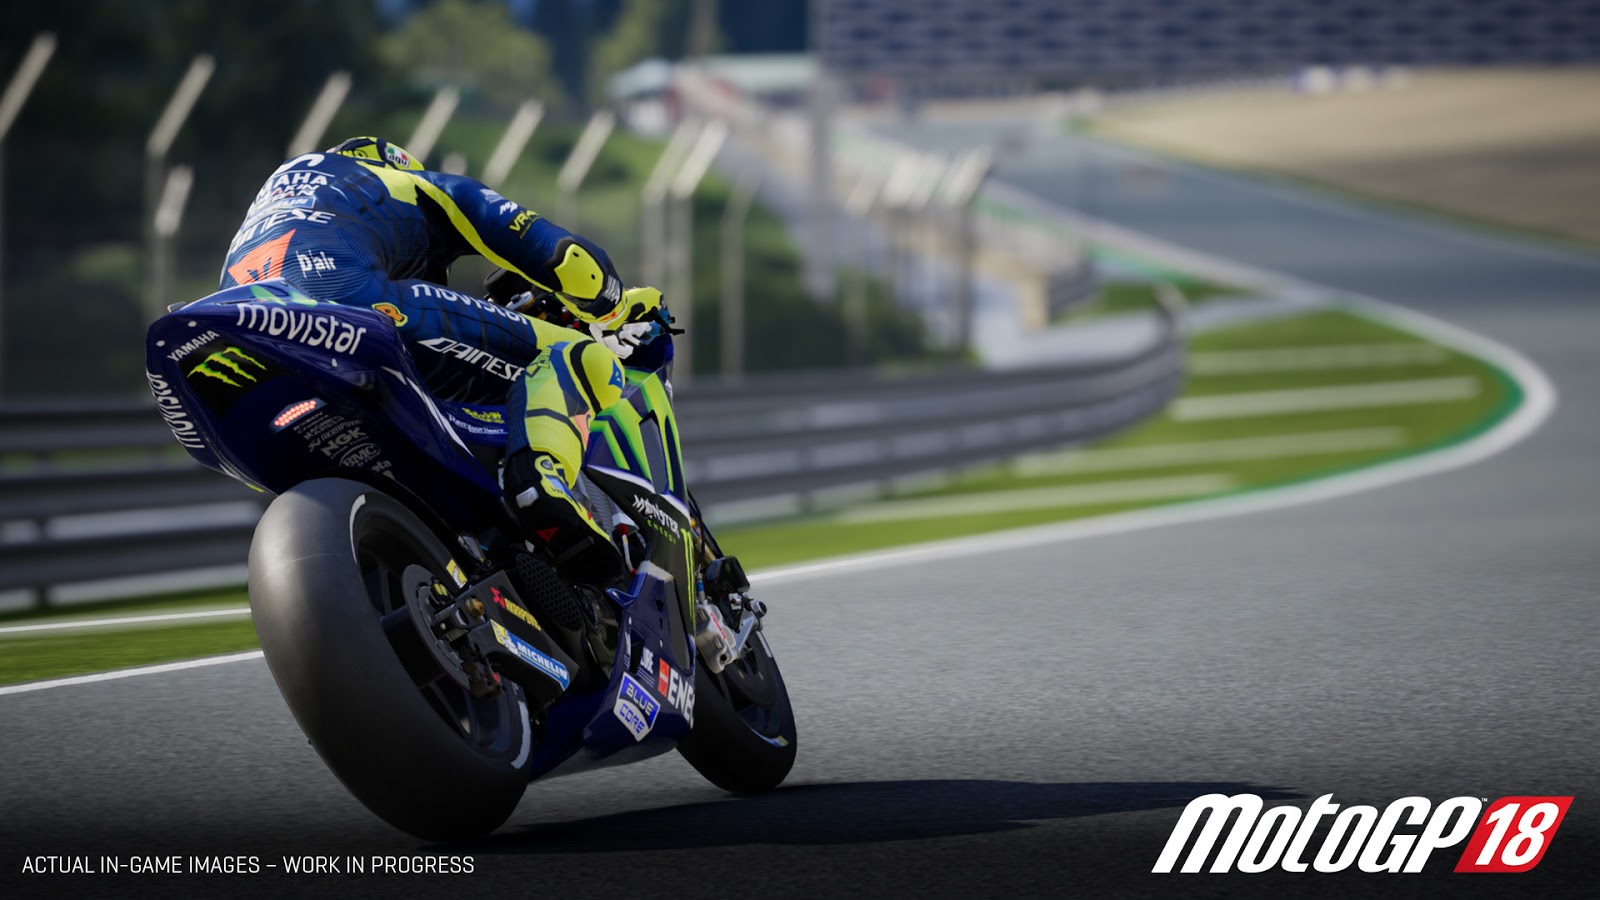 MotoGP 18 Crack Full Download